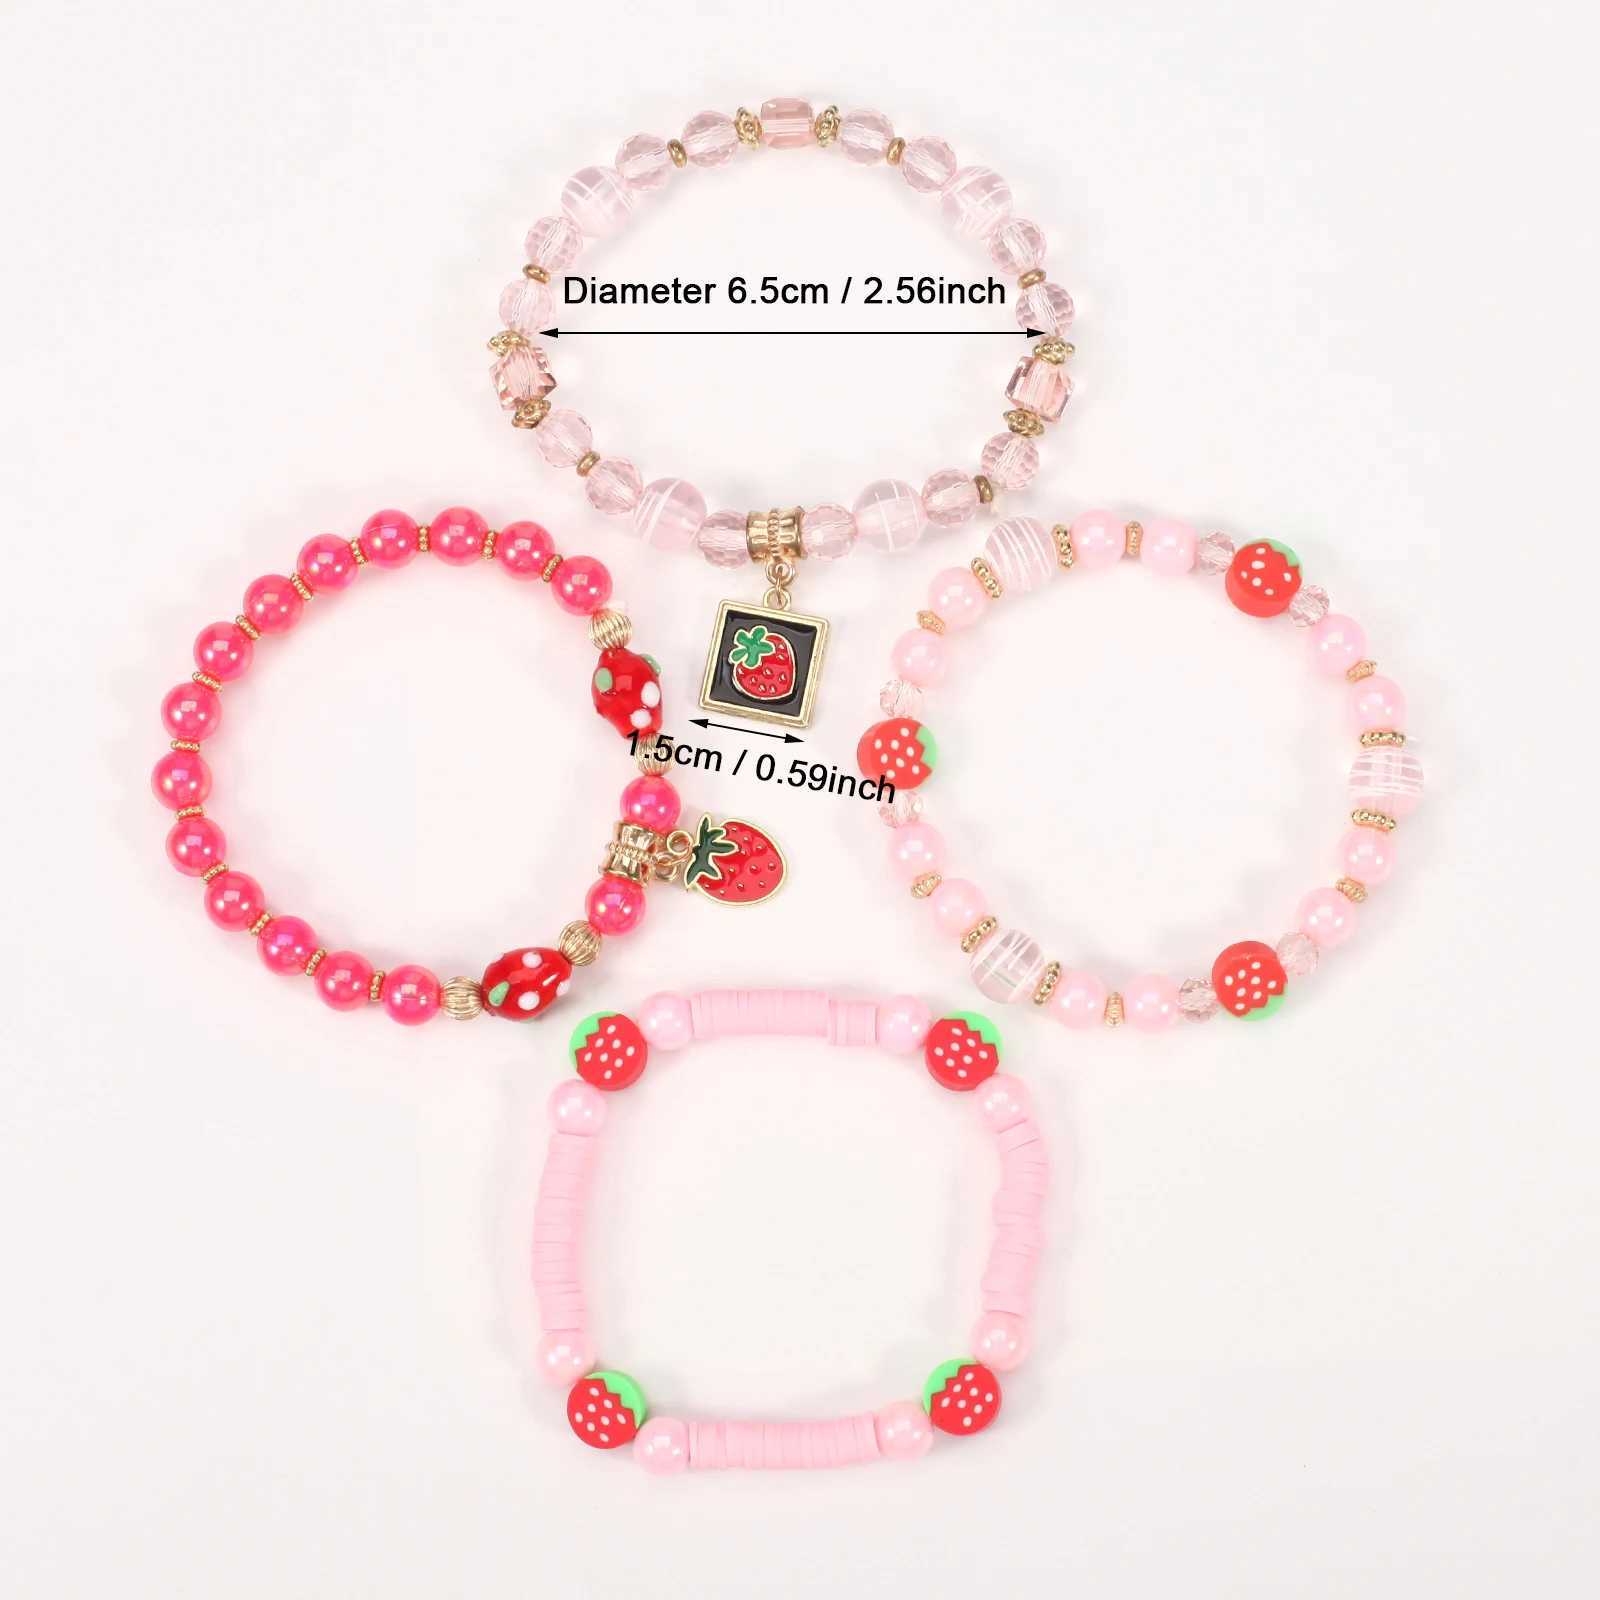 Charm Bracelets Strawberry Pendant Pink Beads Multilayer Stretch Bracelet Cute Fruit Design Hand Decoration Gift For Women